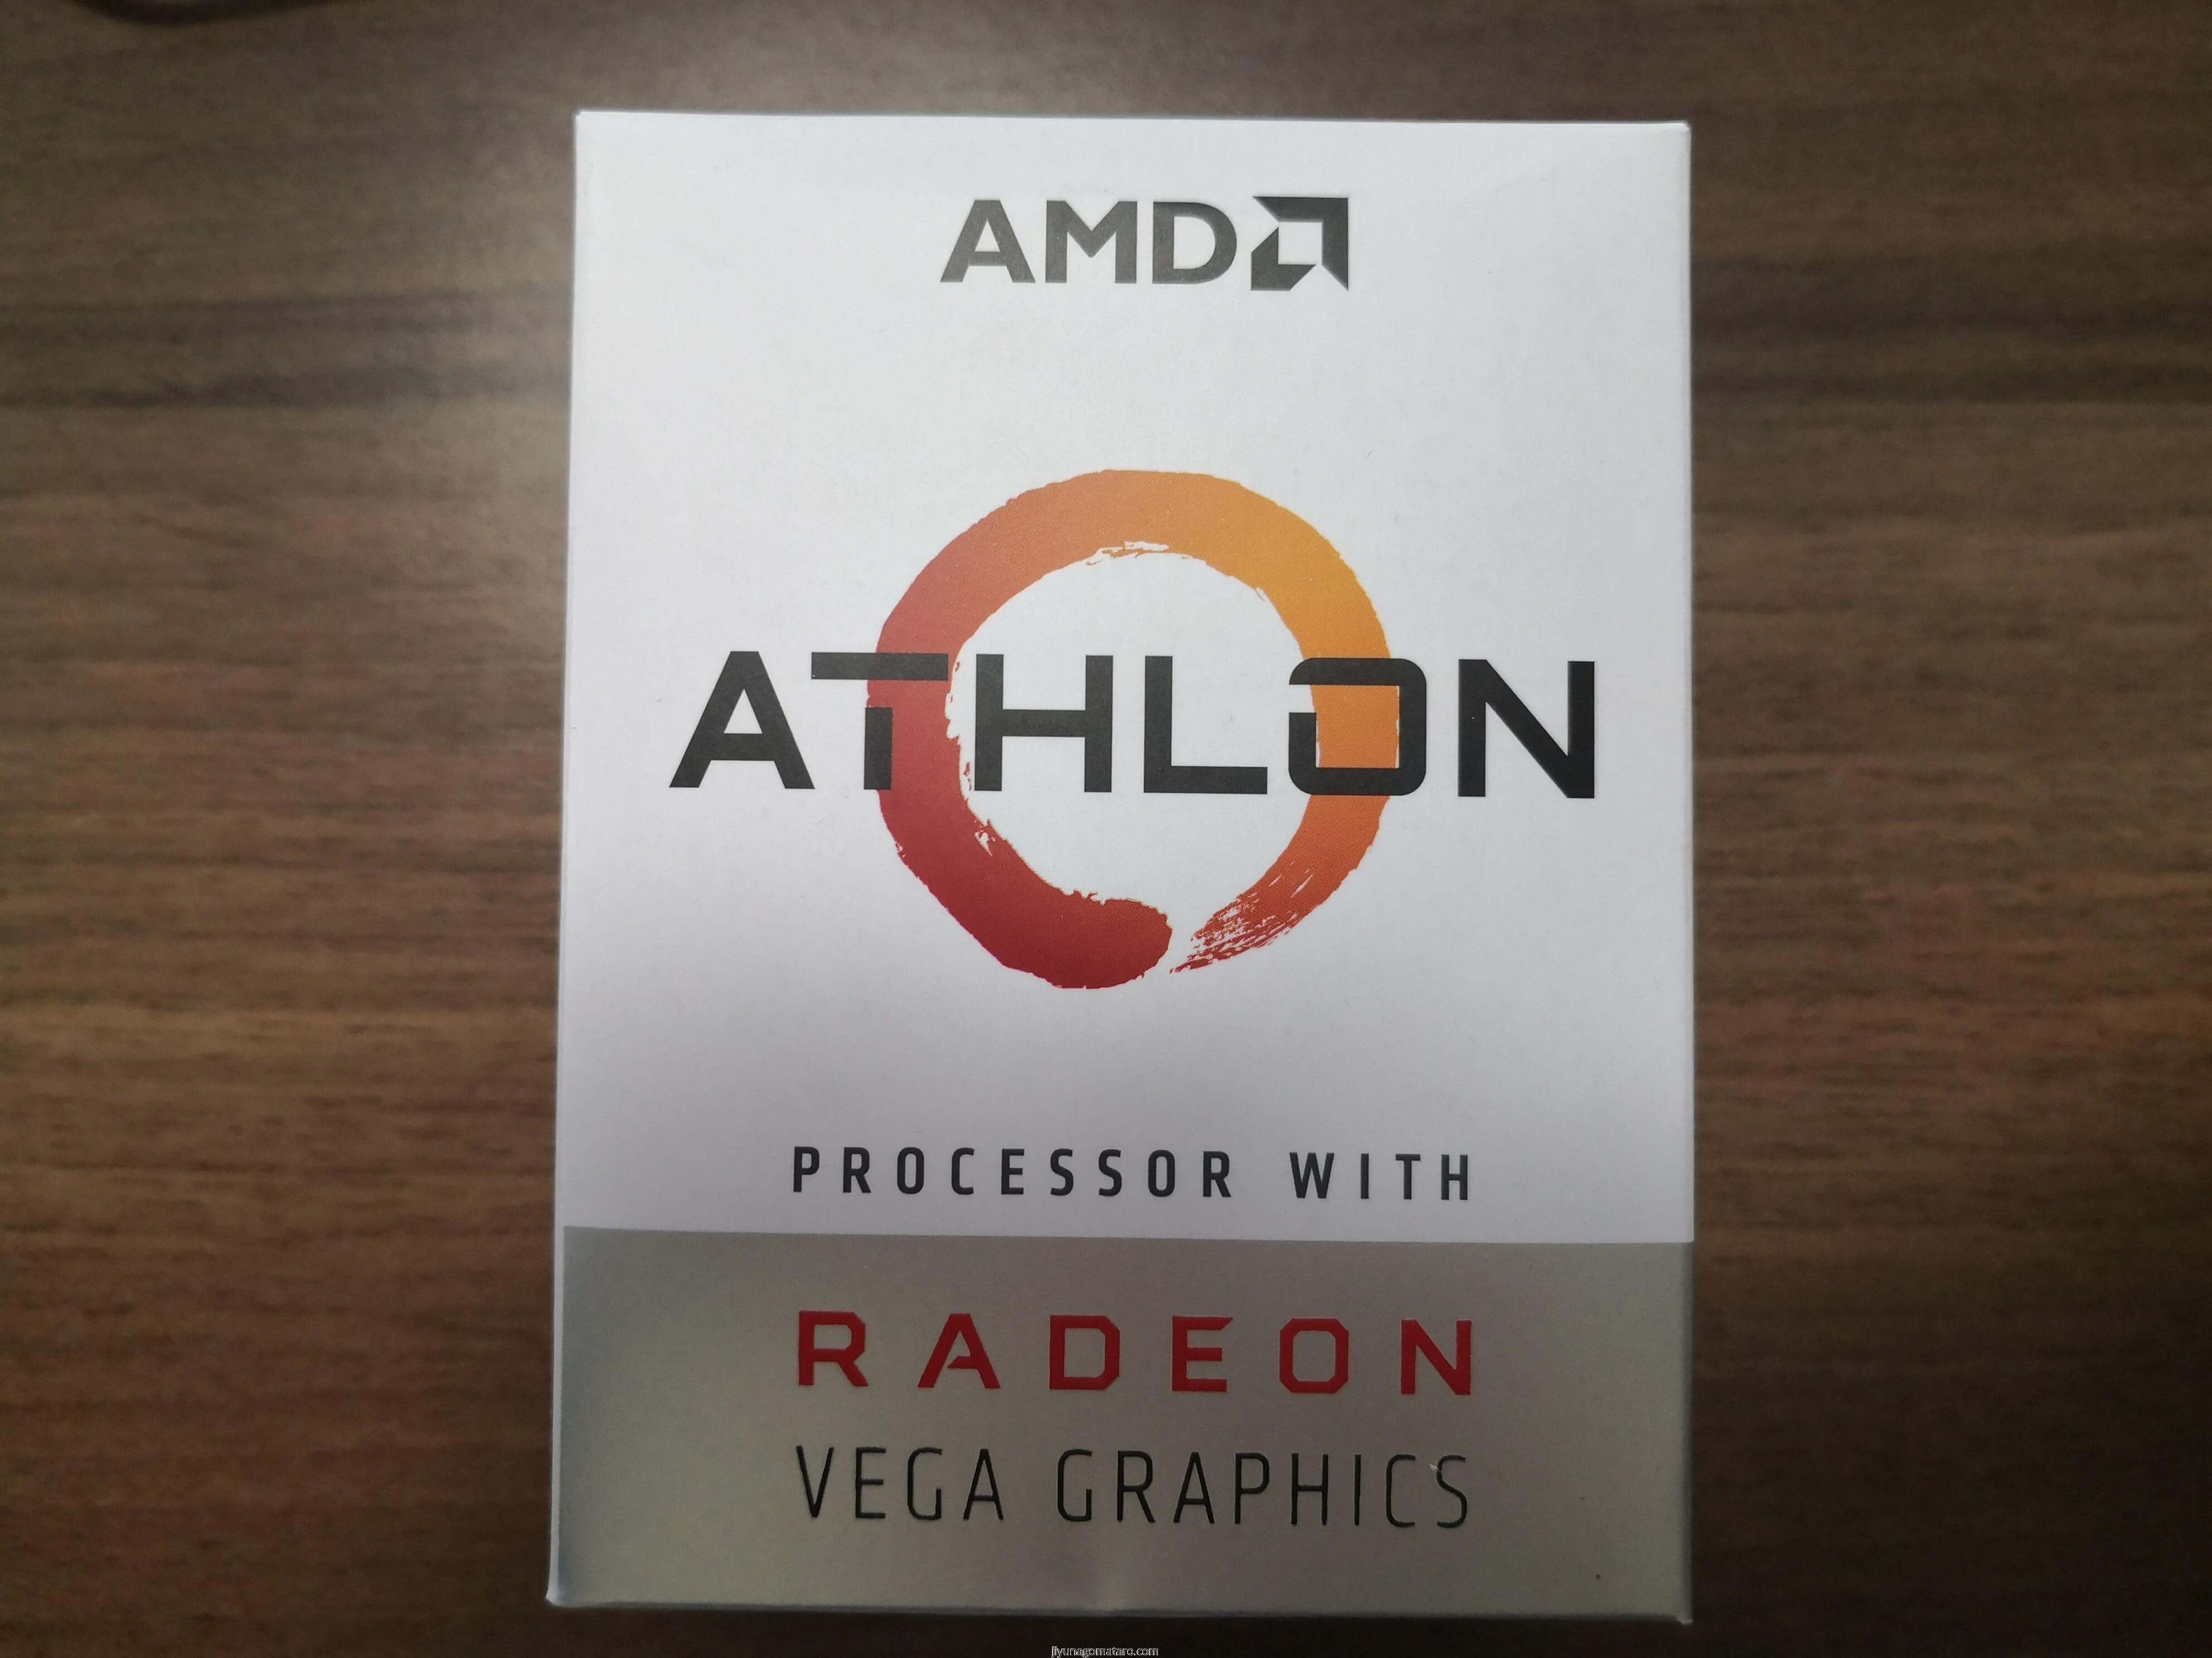 AMD AM4 ATHLON 3000G RADEON VEGA graphic